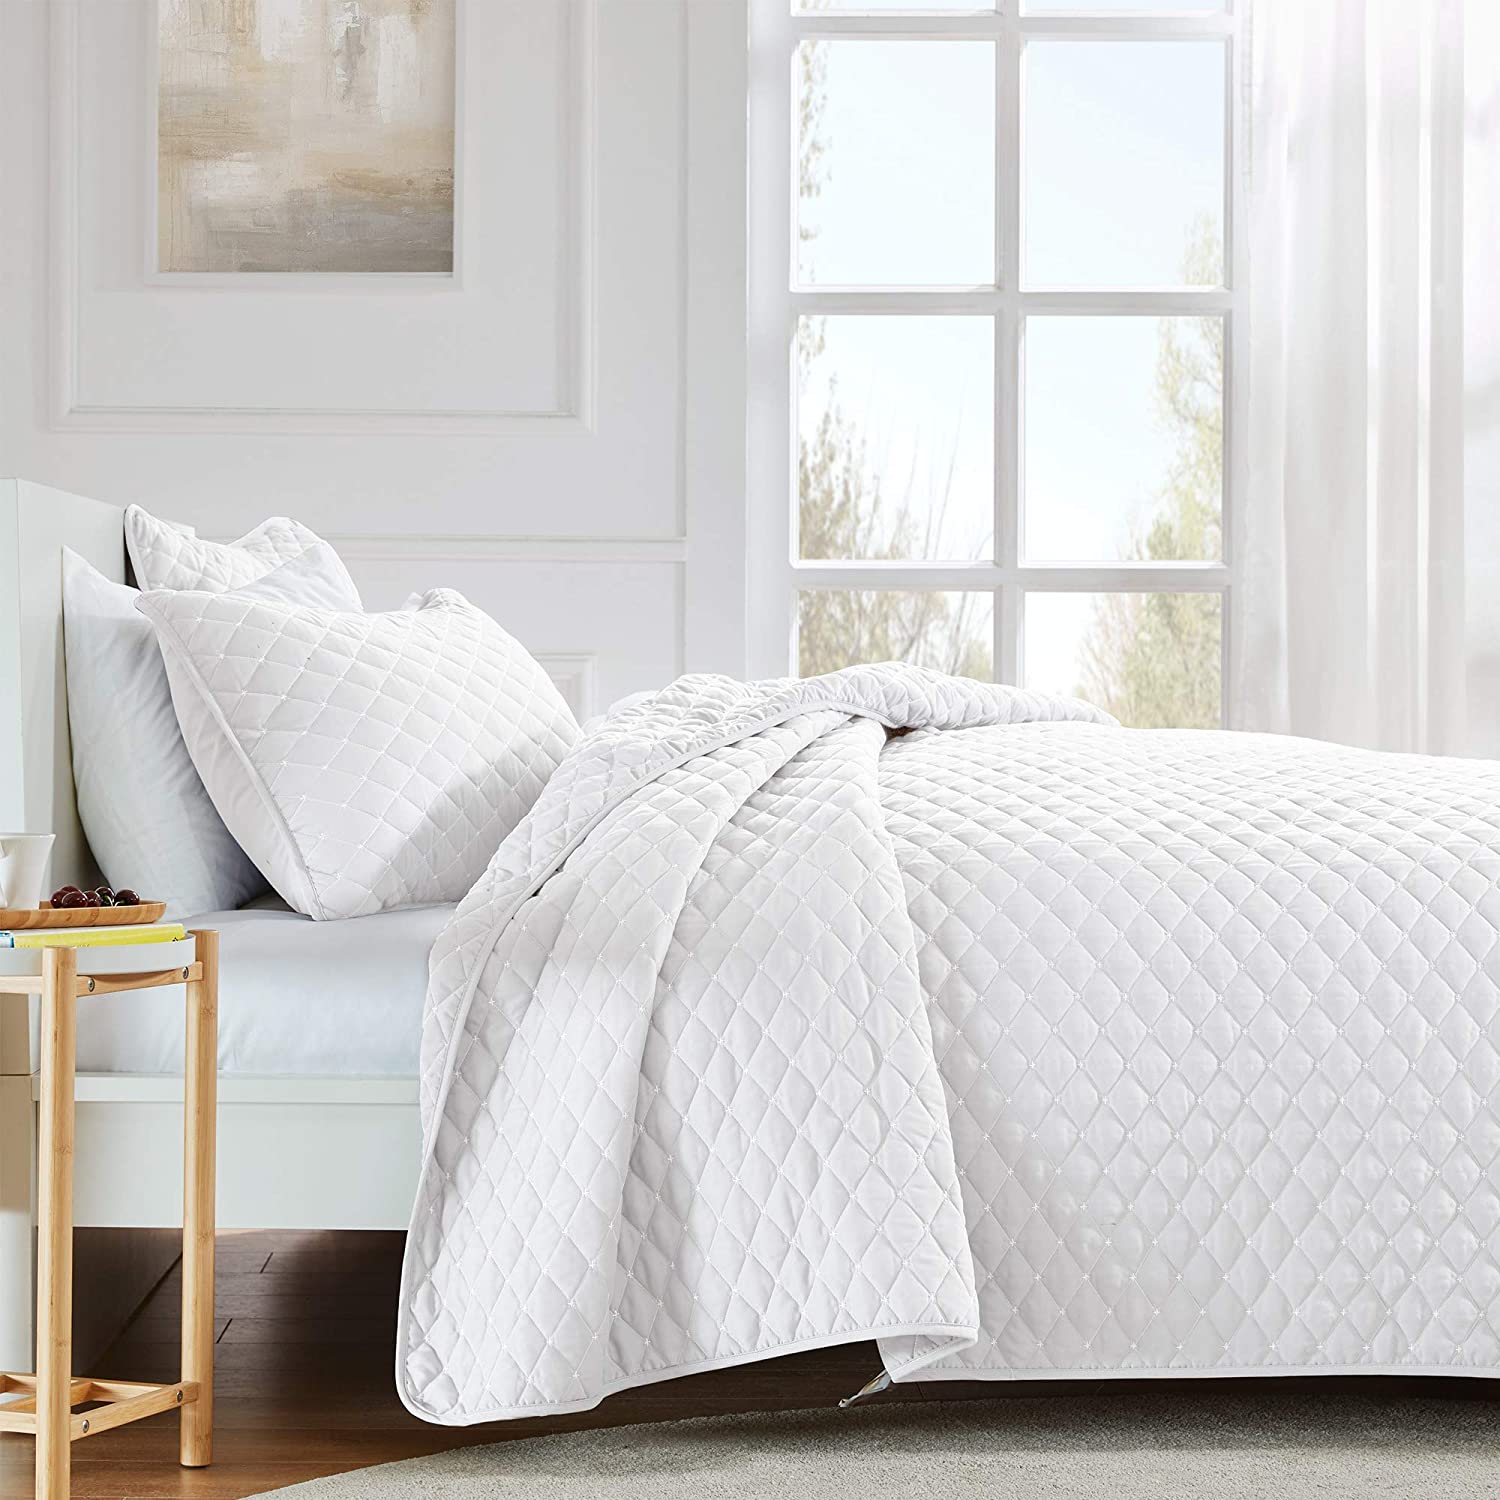 Details about   SLEEP ZONE Premium Quilt Set 120gsm Fabric Stich Bedding Set Twin Size 90x96 inc 